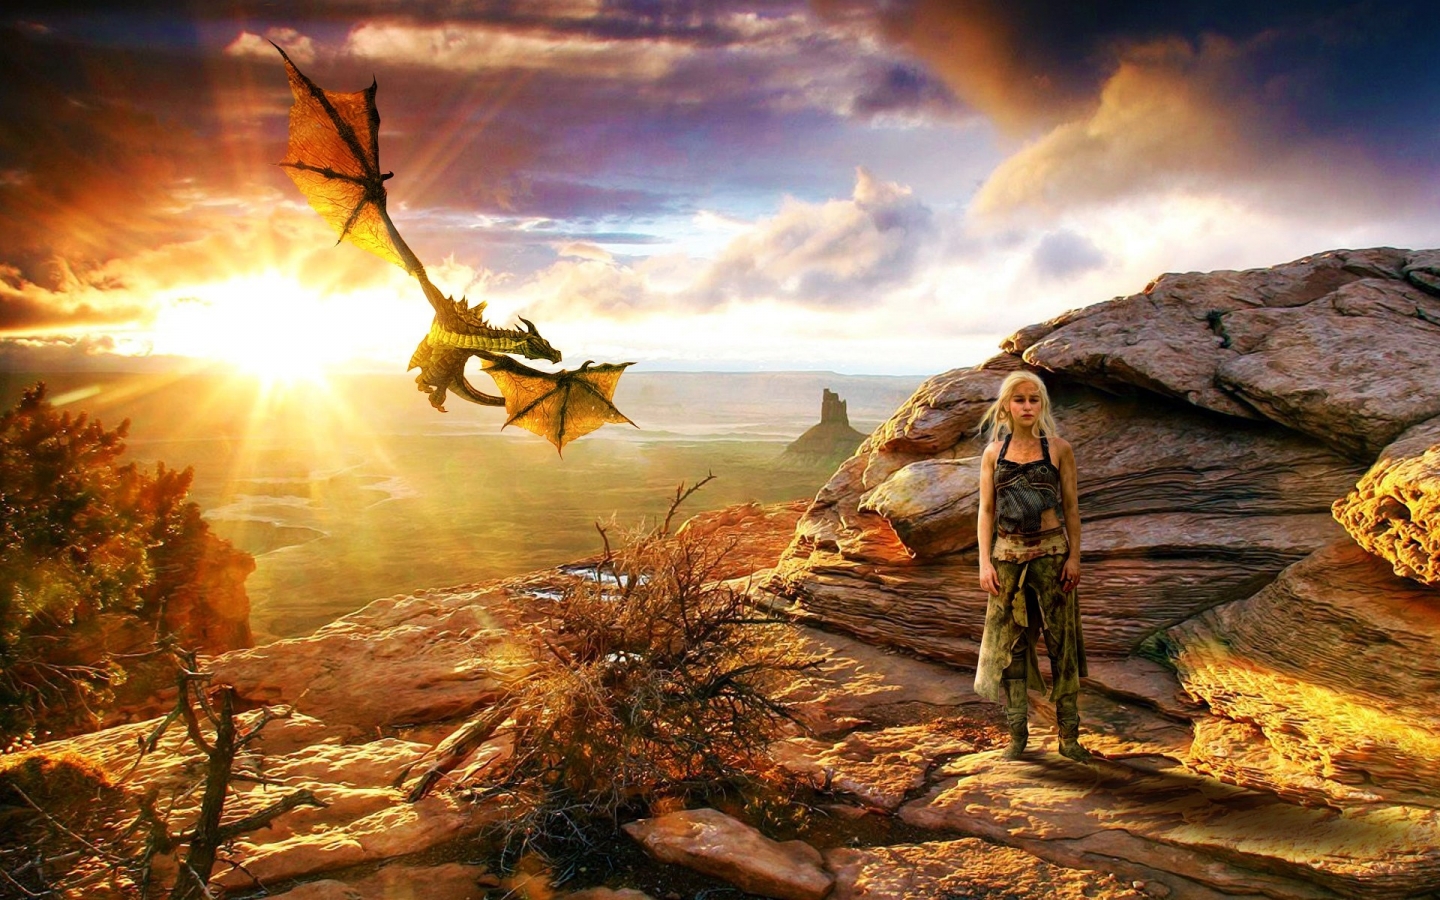 Daenerys Targaryen with Dragon for 1440 x 900 widescreen resolution